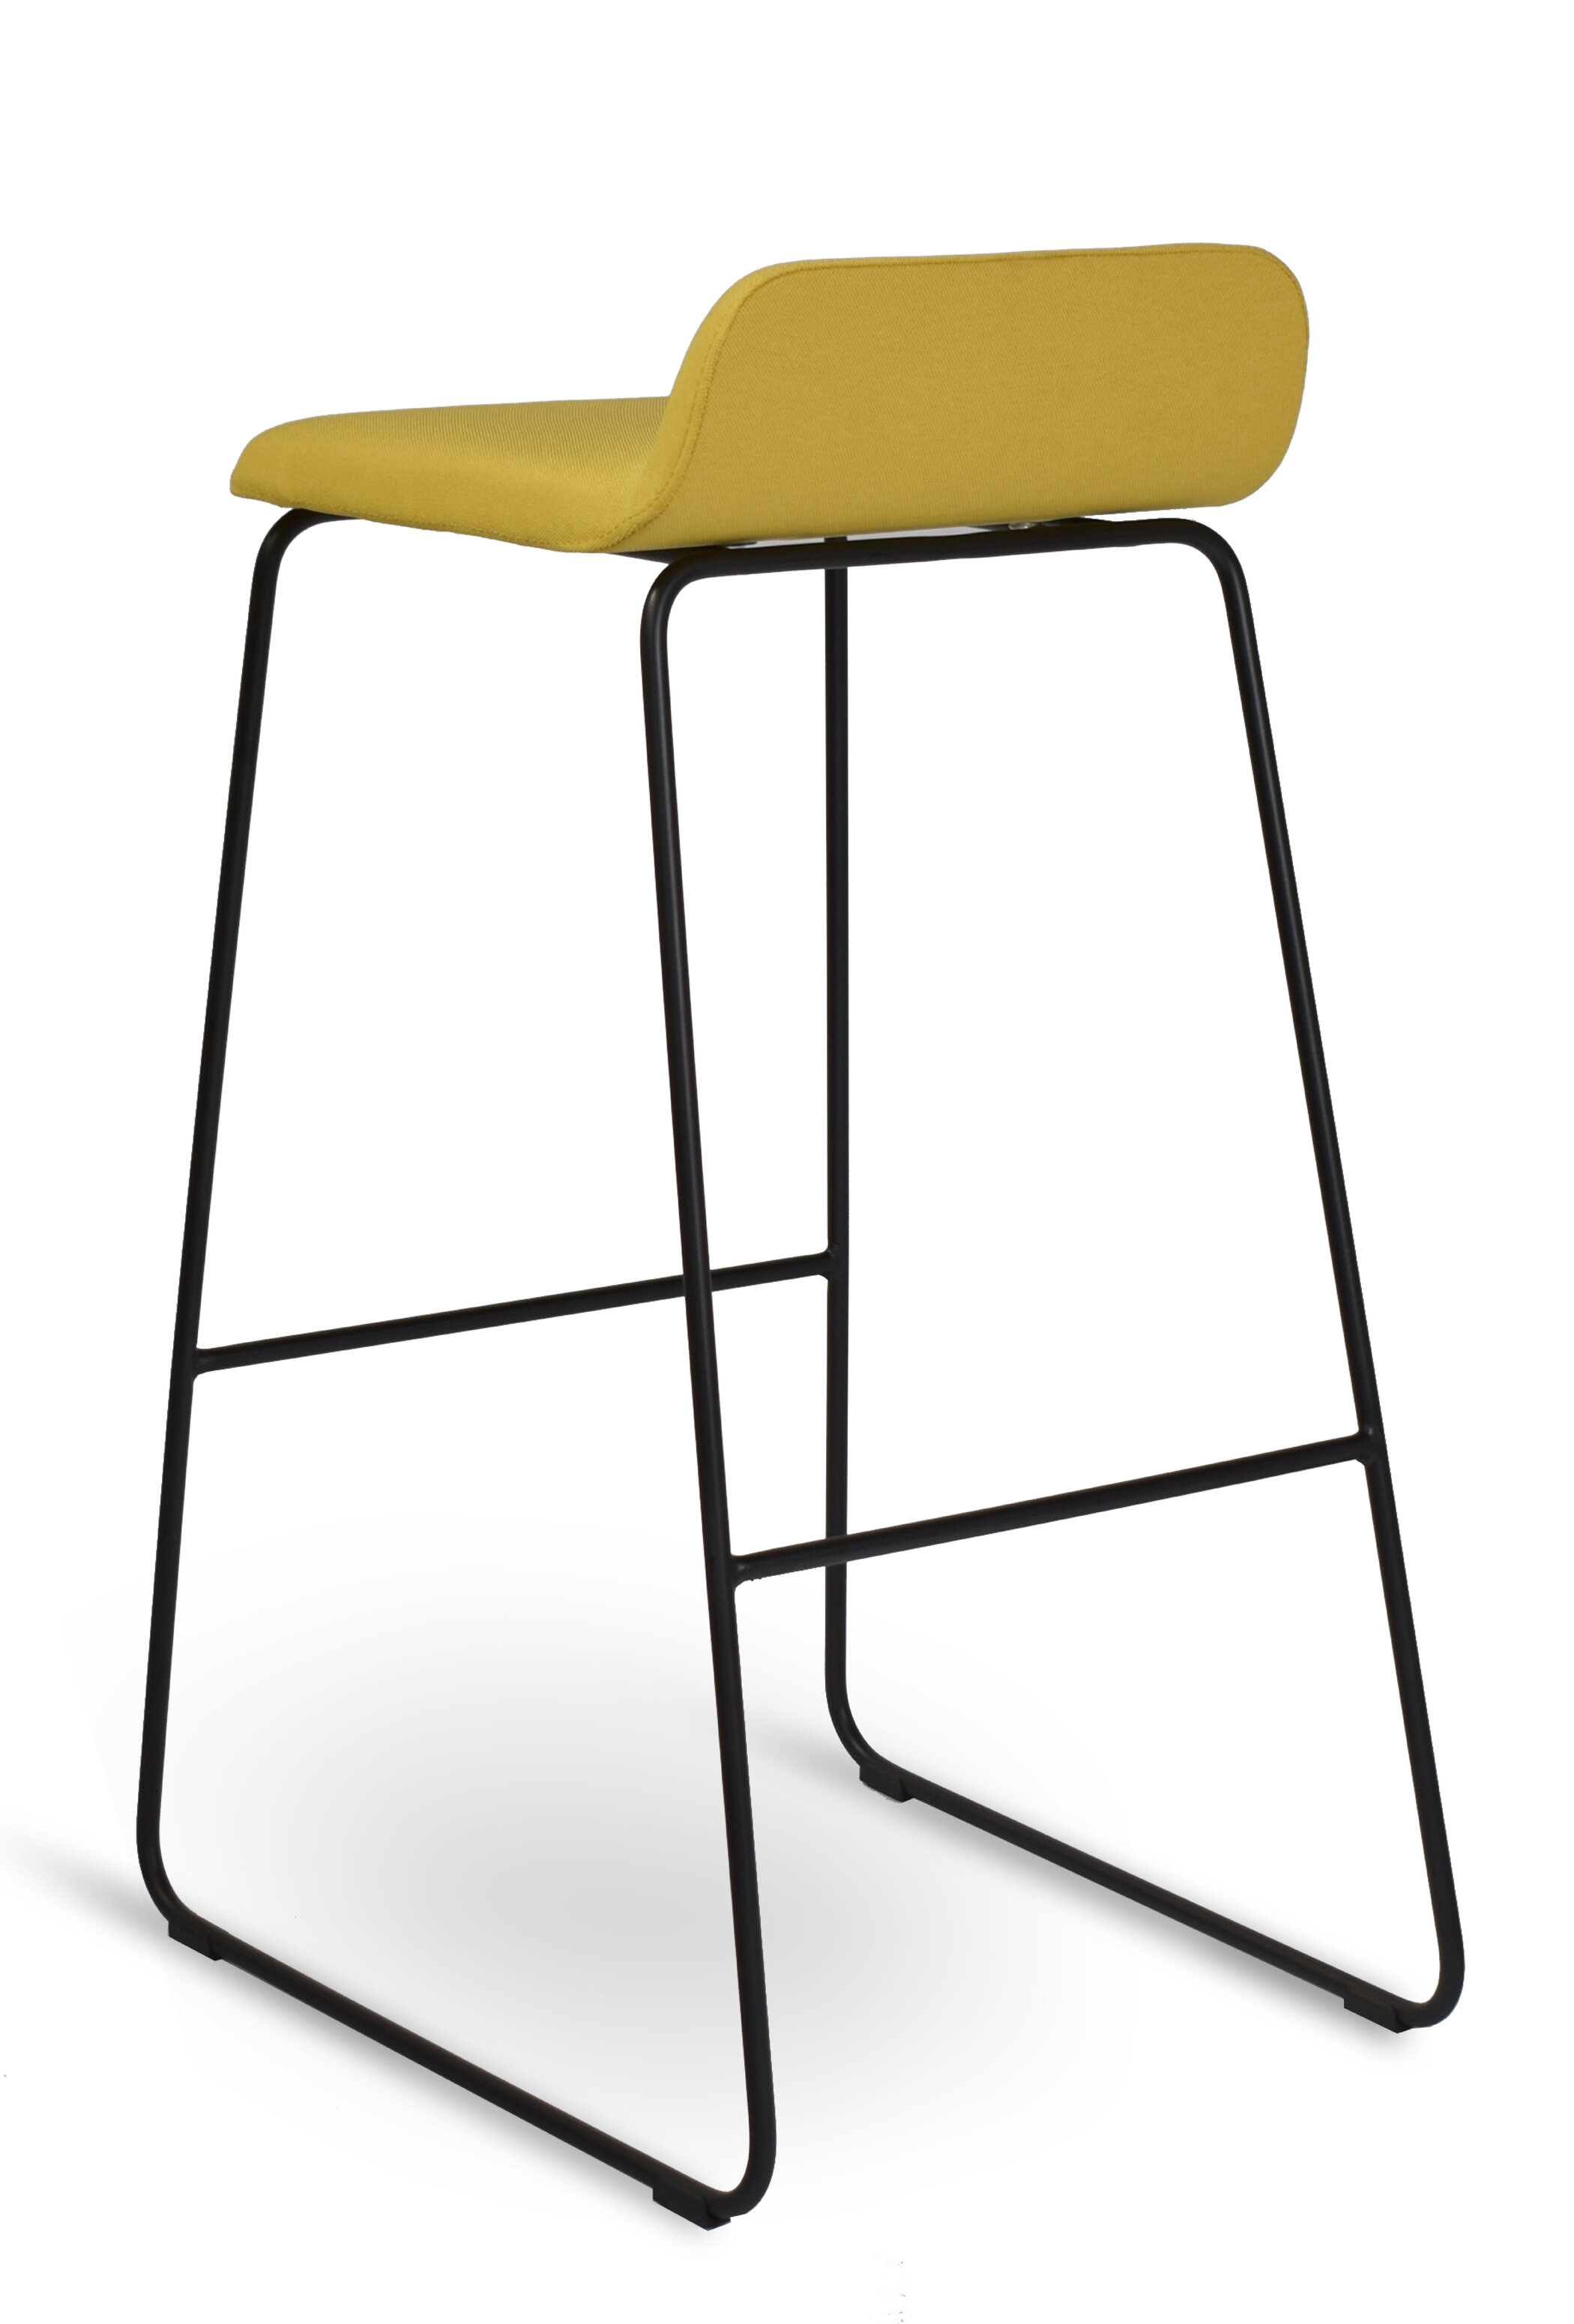 WS - Lolli high stool - Yellow Upholstered (Back angle)